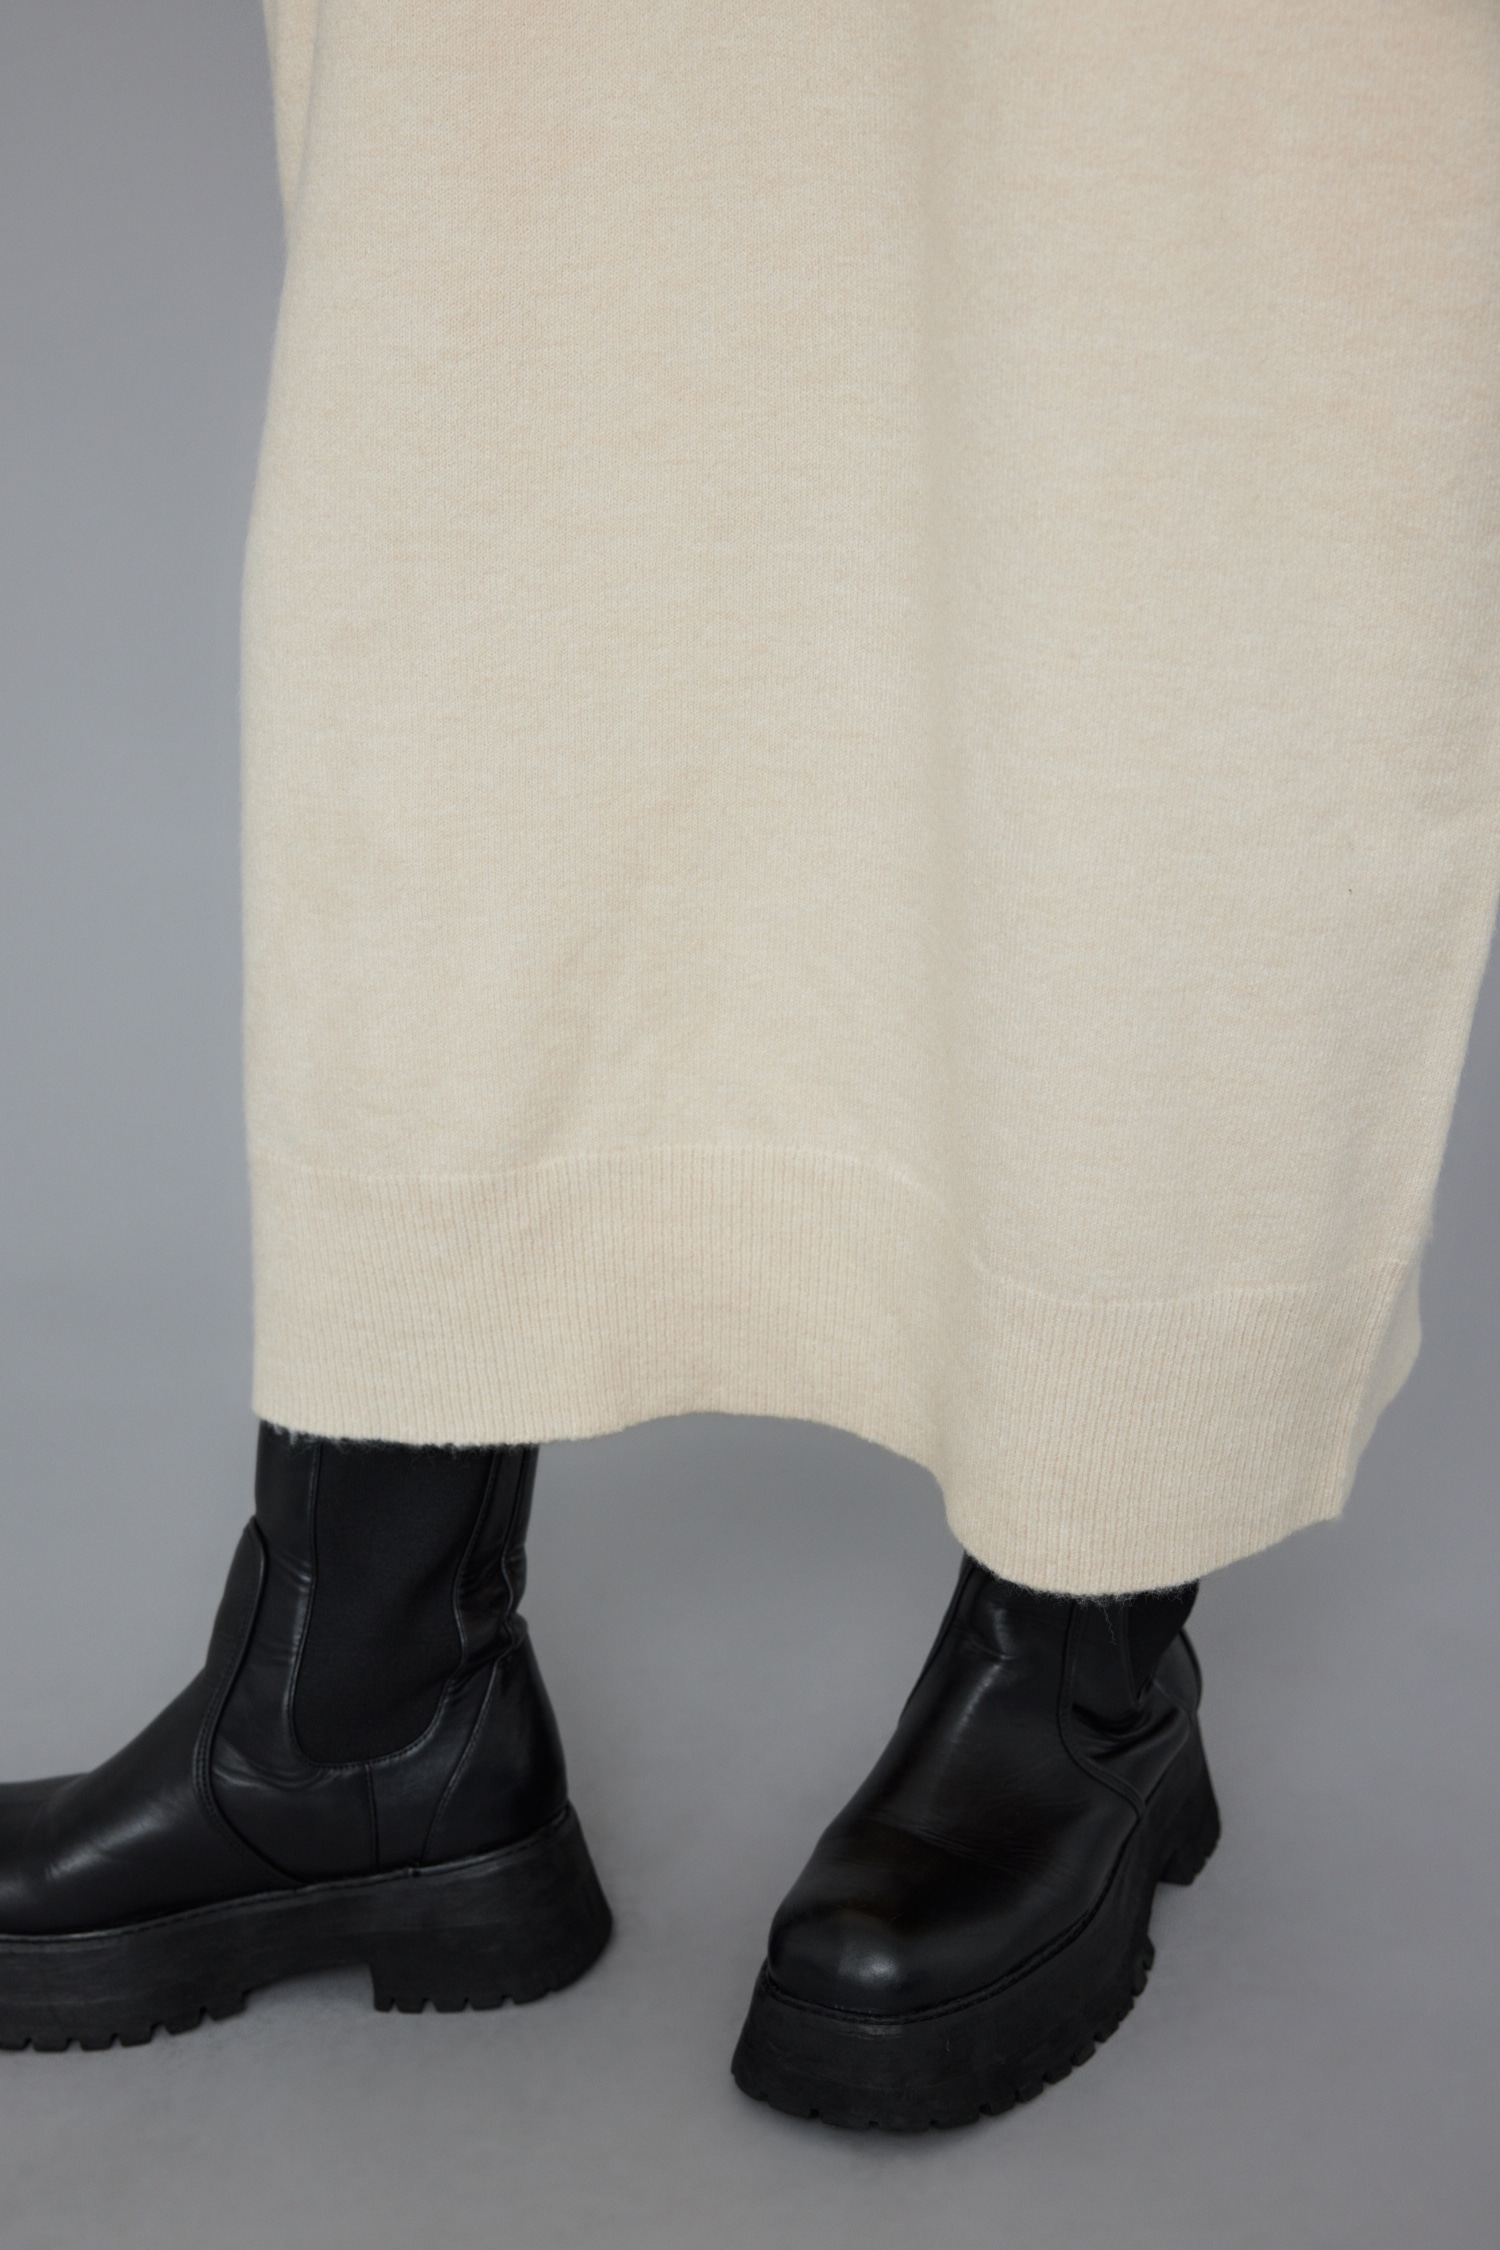 HeRIN.CYE | Ruffle knit dress (ワンピース(ロング） ) |SHEL'TTER 